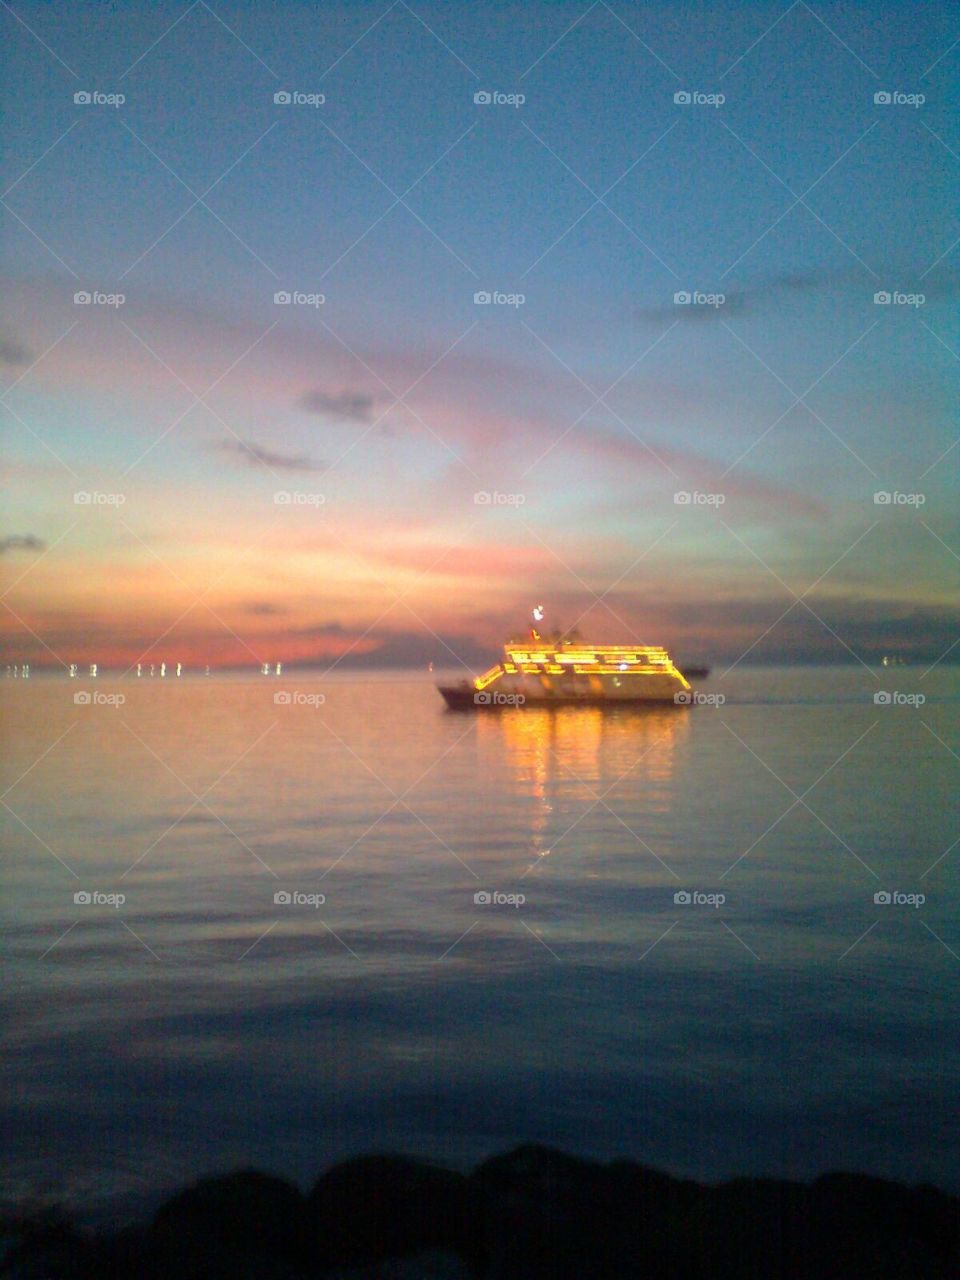 Ship across the sea
Philippines 